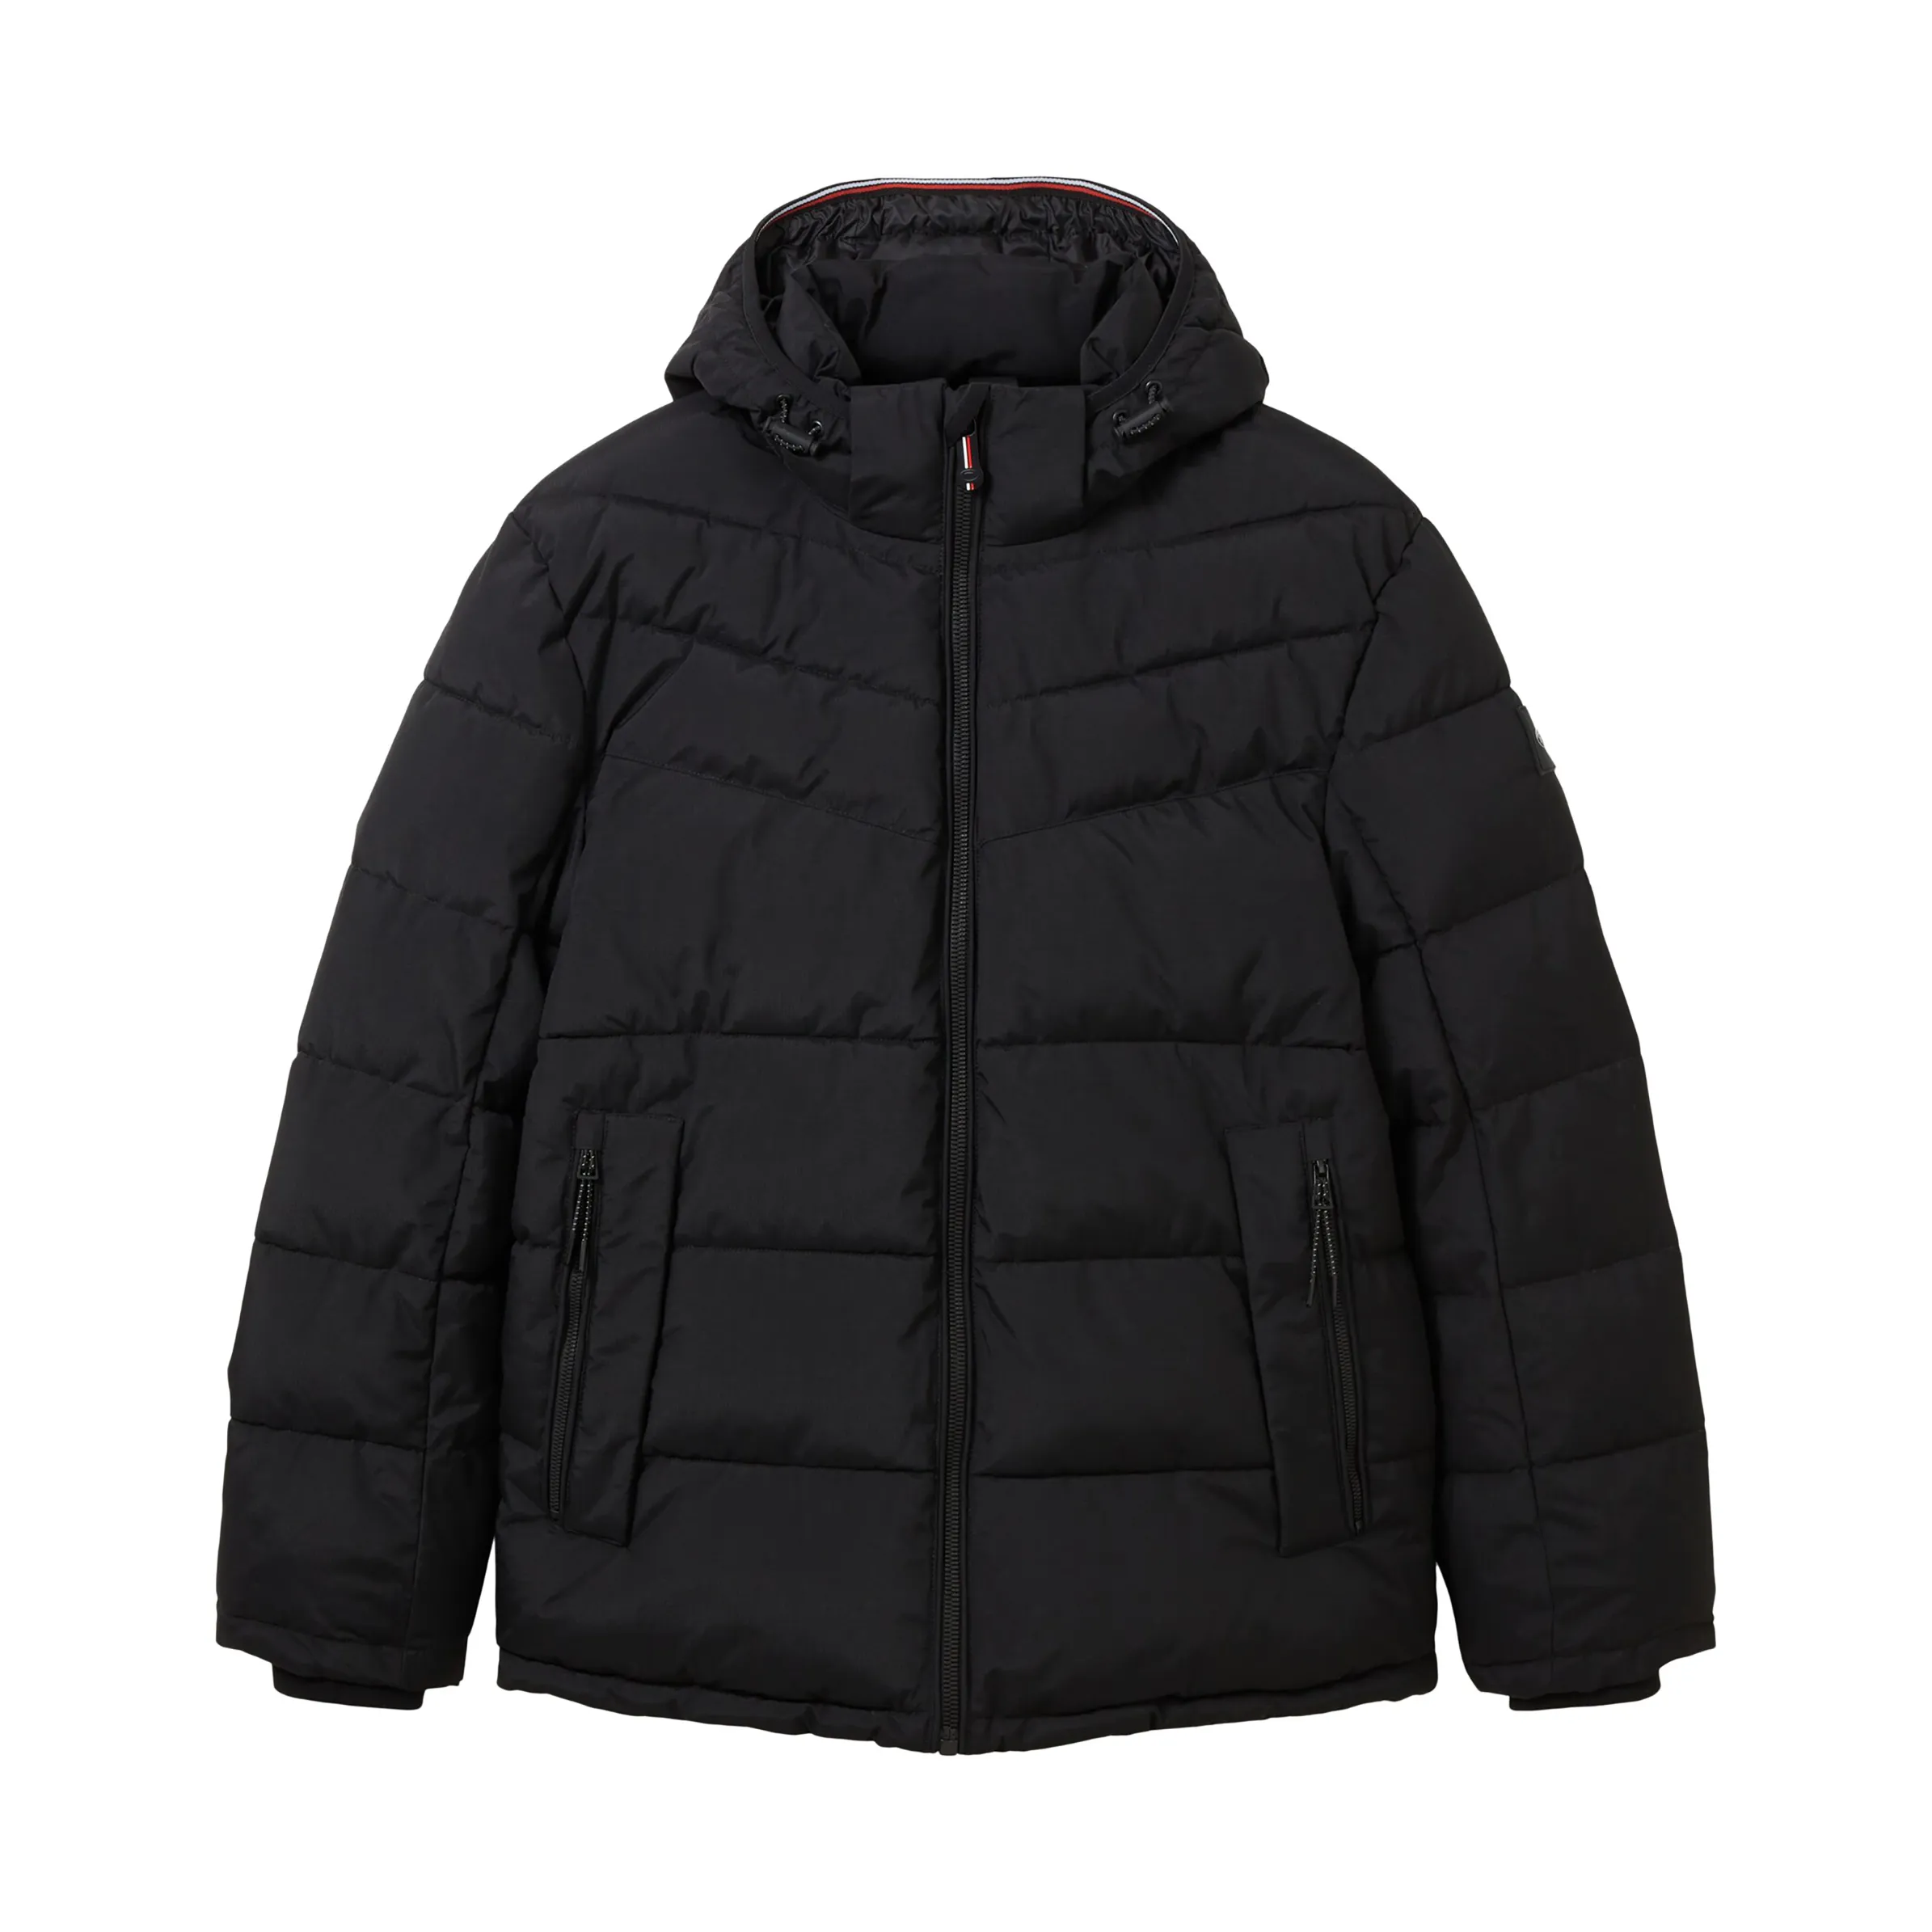 Tom Tailor 1037339 puffer jacket with hood Schwarz 884291 29999 1